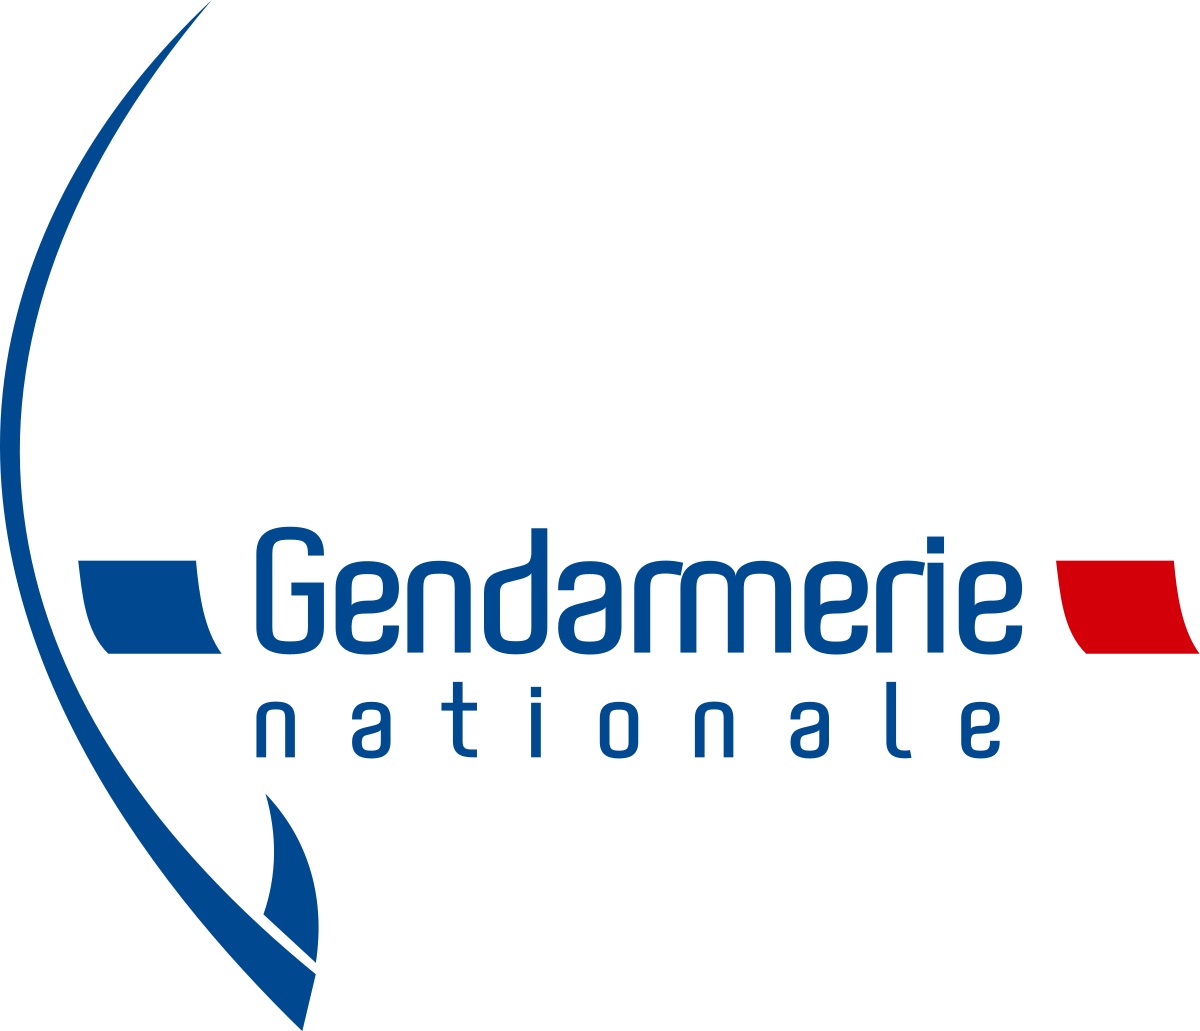 actualite-200723-Gendarmerie_nationale_logo.jpg